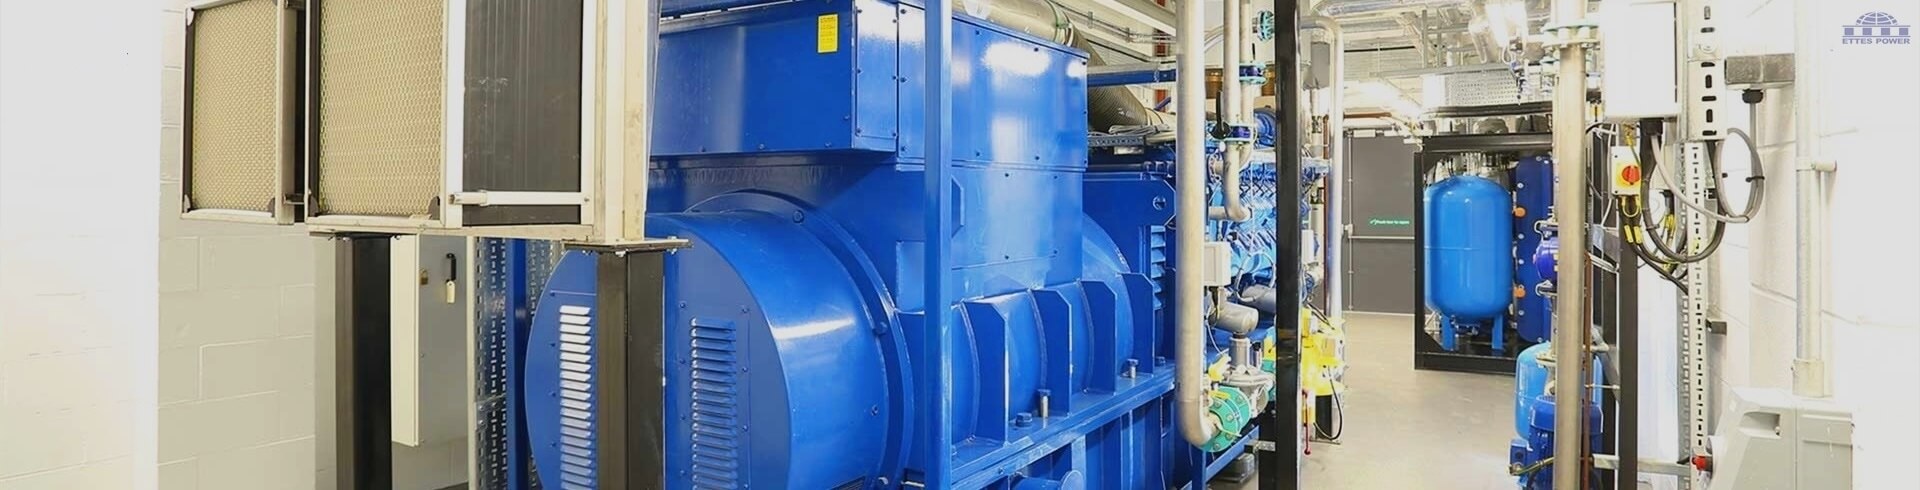 MWM 1000kW 1MW landfill gas LFG biogas engine generator set & CHP ETTES POWER